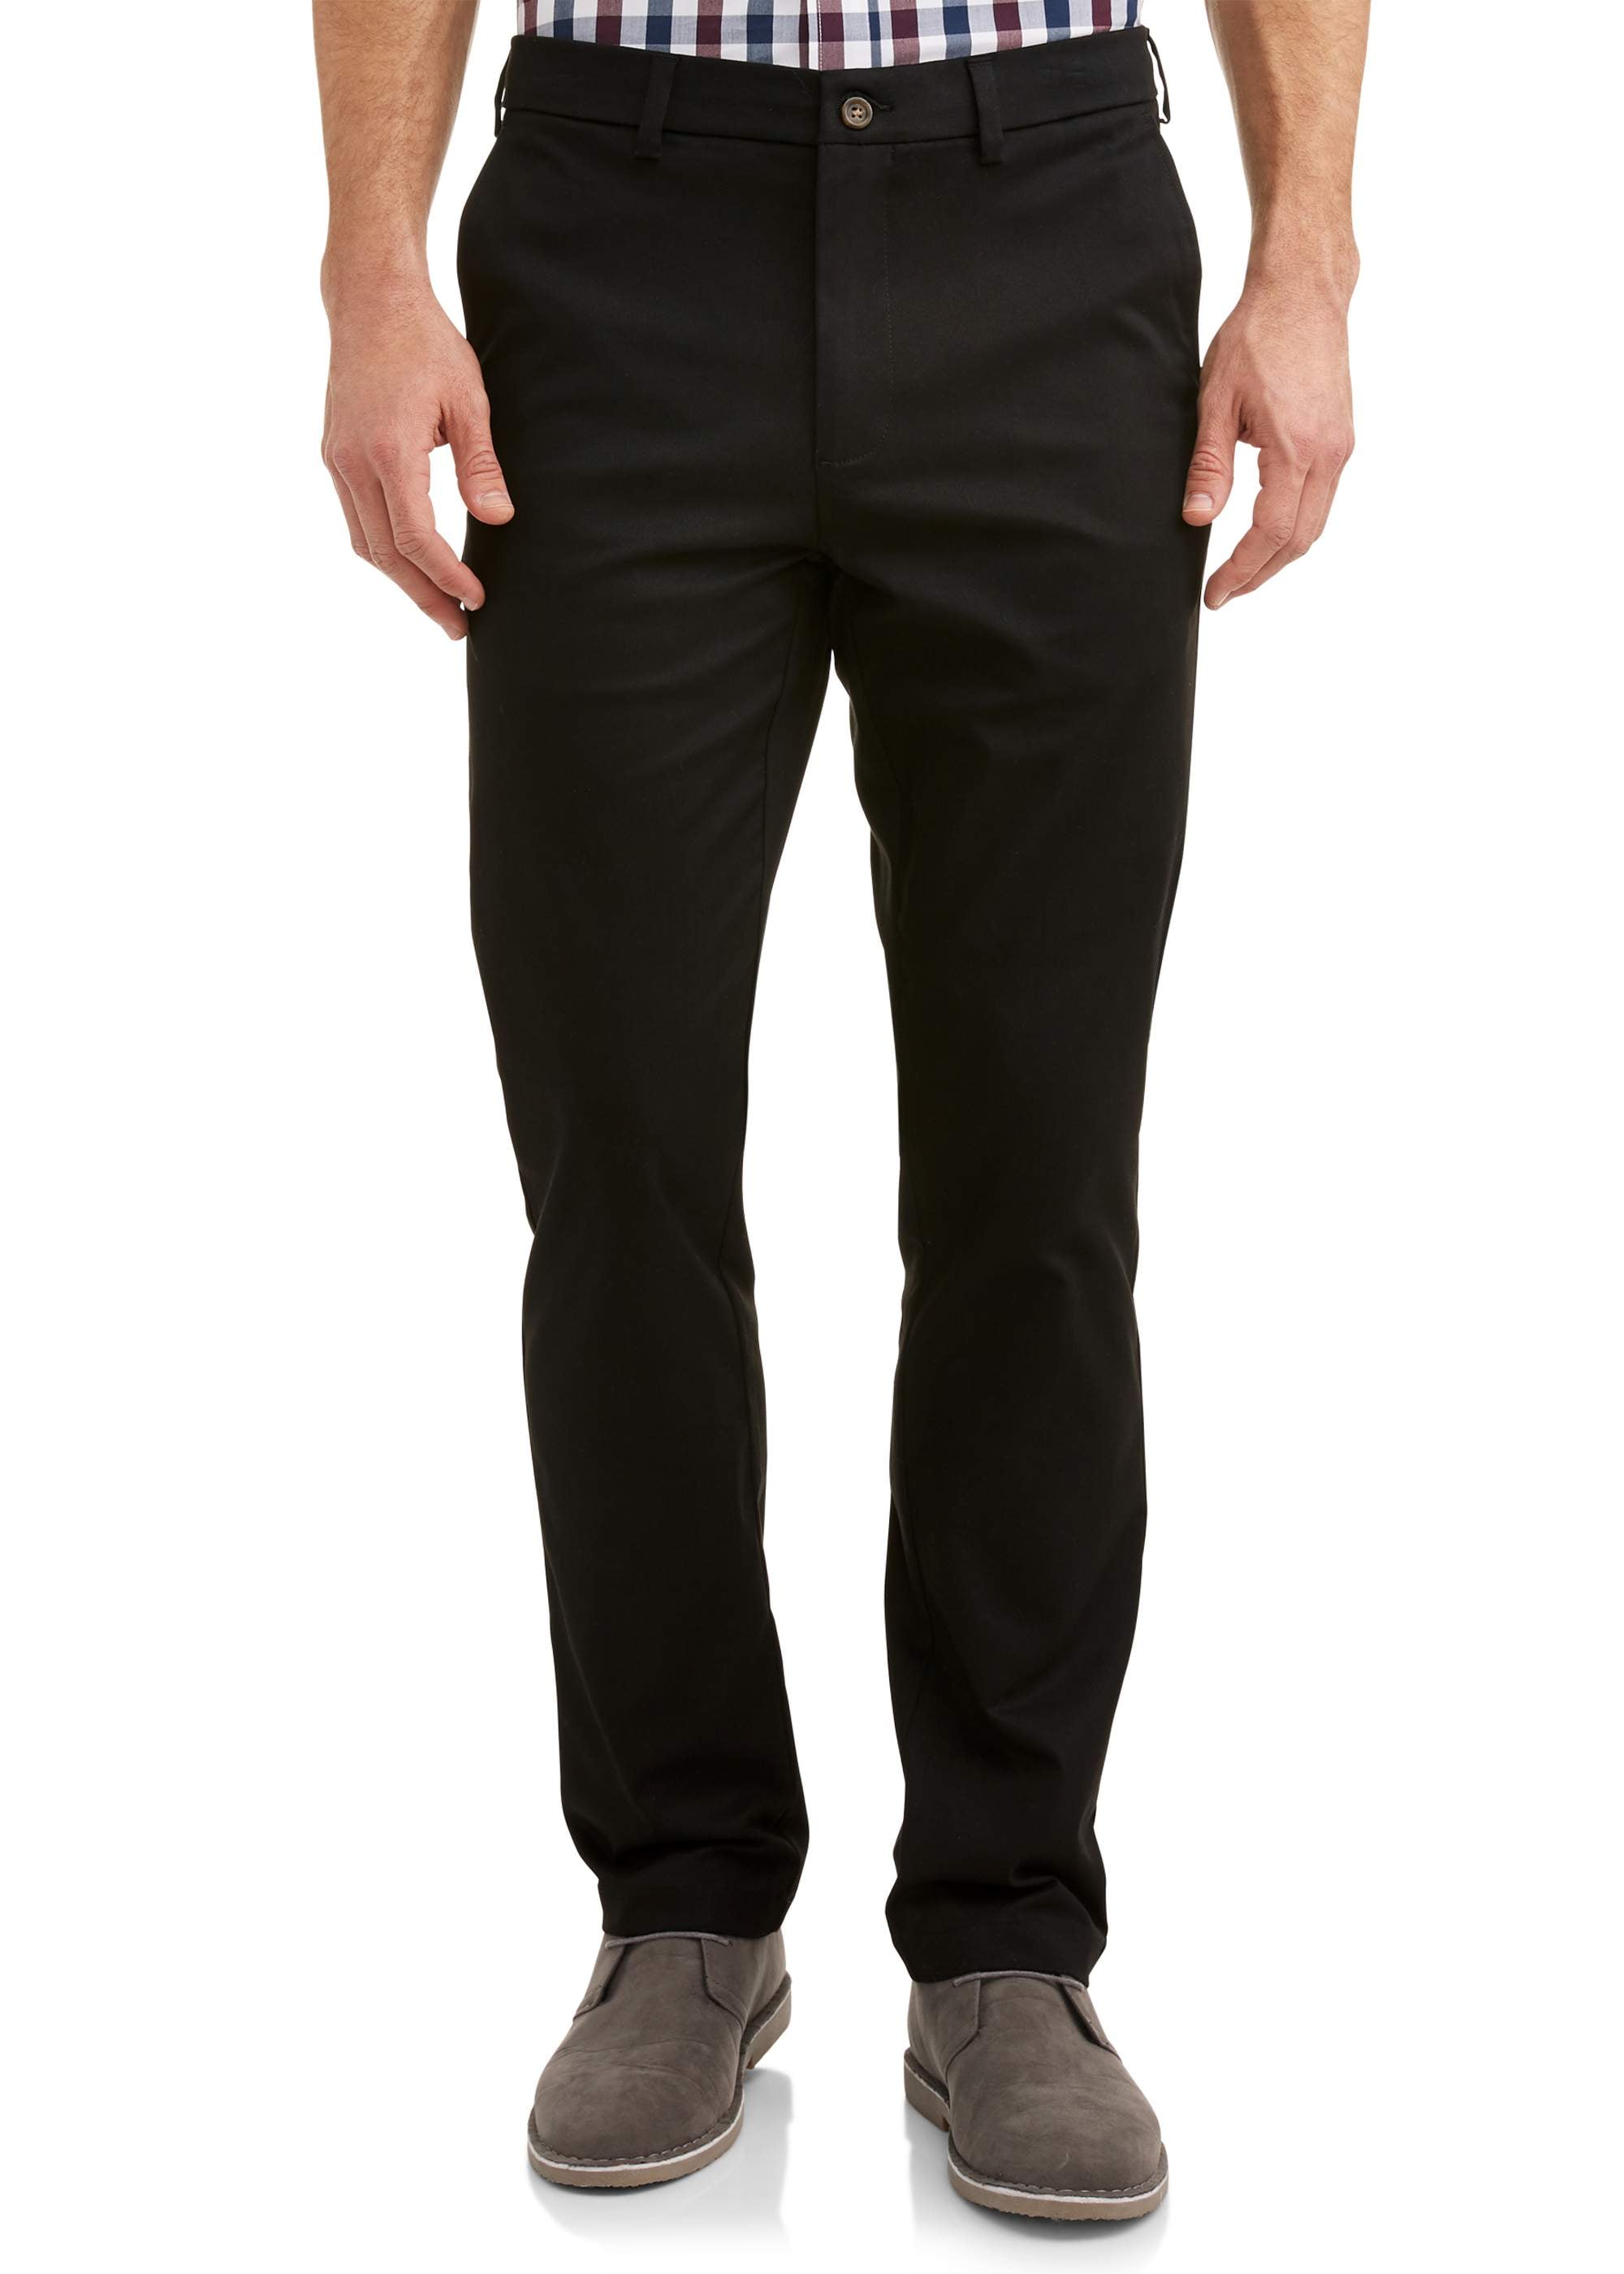 Men Khaki Pants Outfits - 36 Best Ways to Style Khakis  Khaki pants outfit,  Khaki pants men, Mens pants fashion